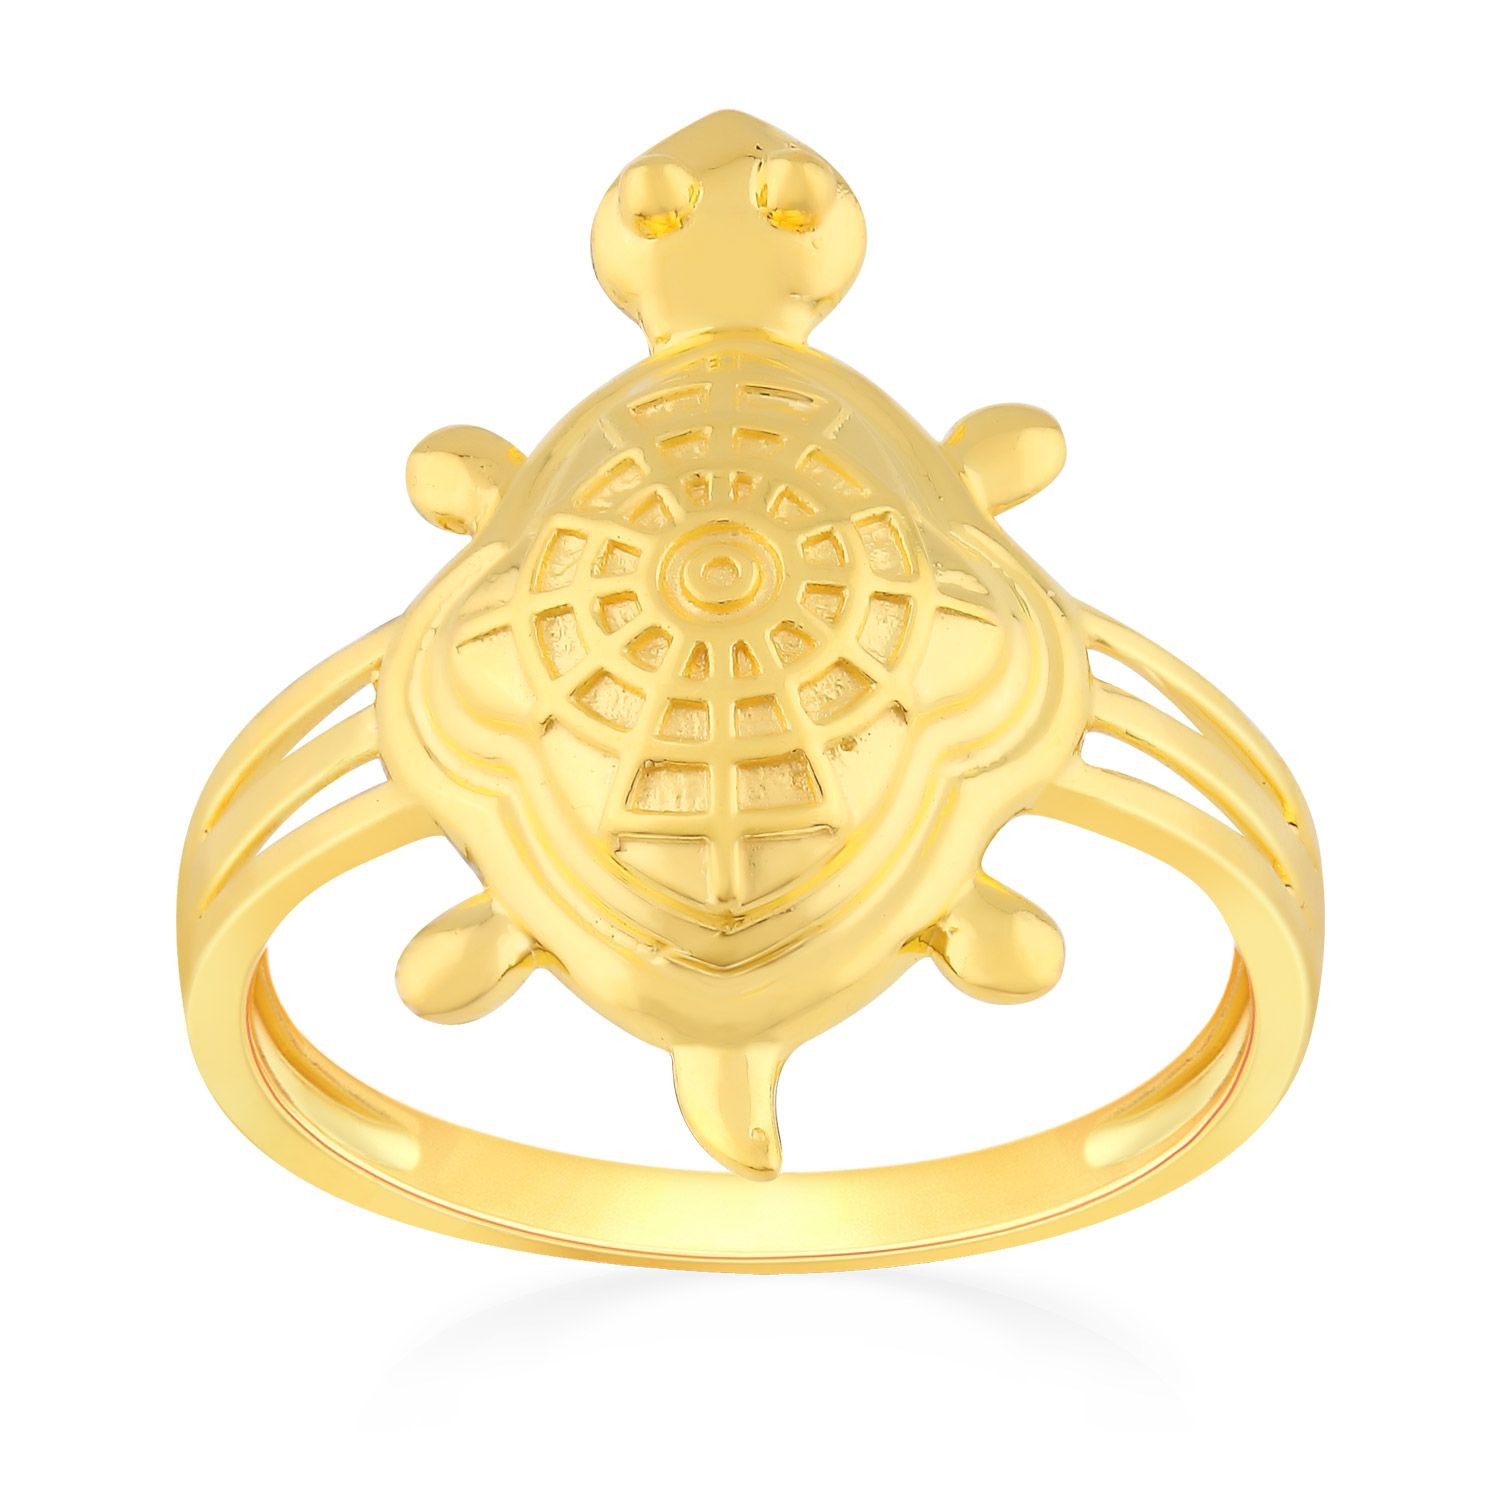 Malabar 22 KT Gold Studded Casual Ring FRNOSKY605